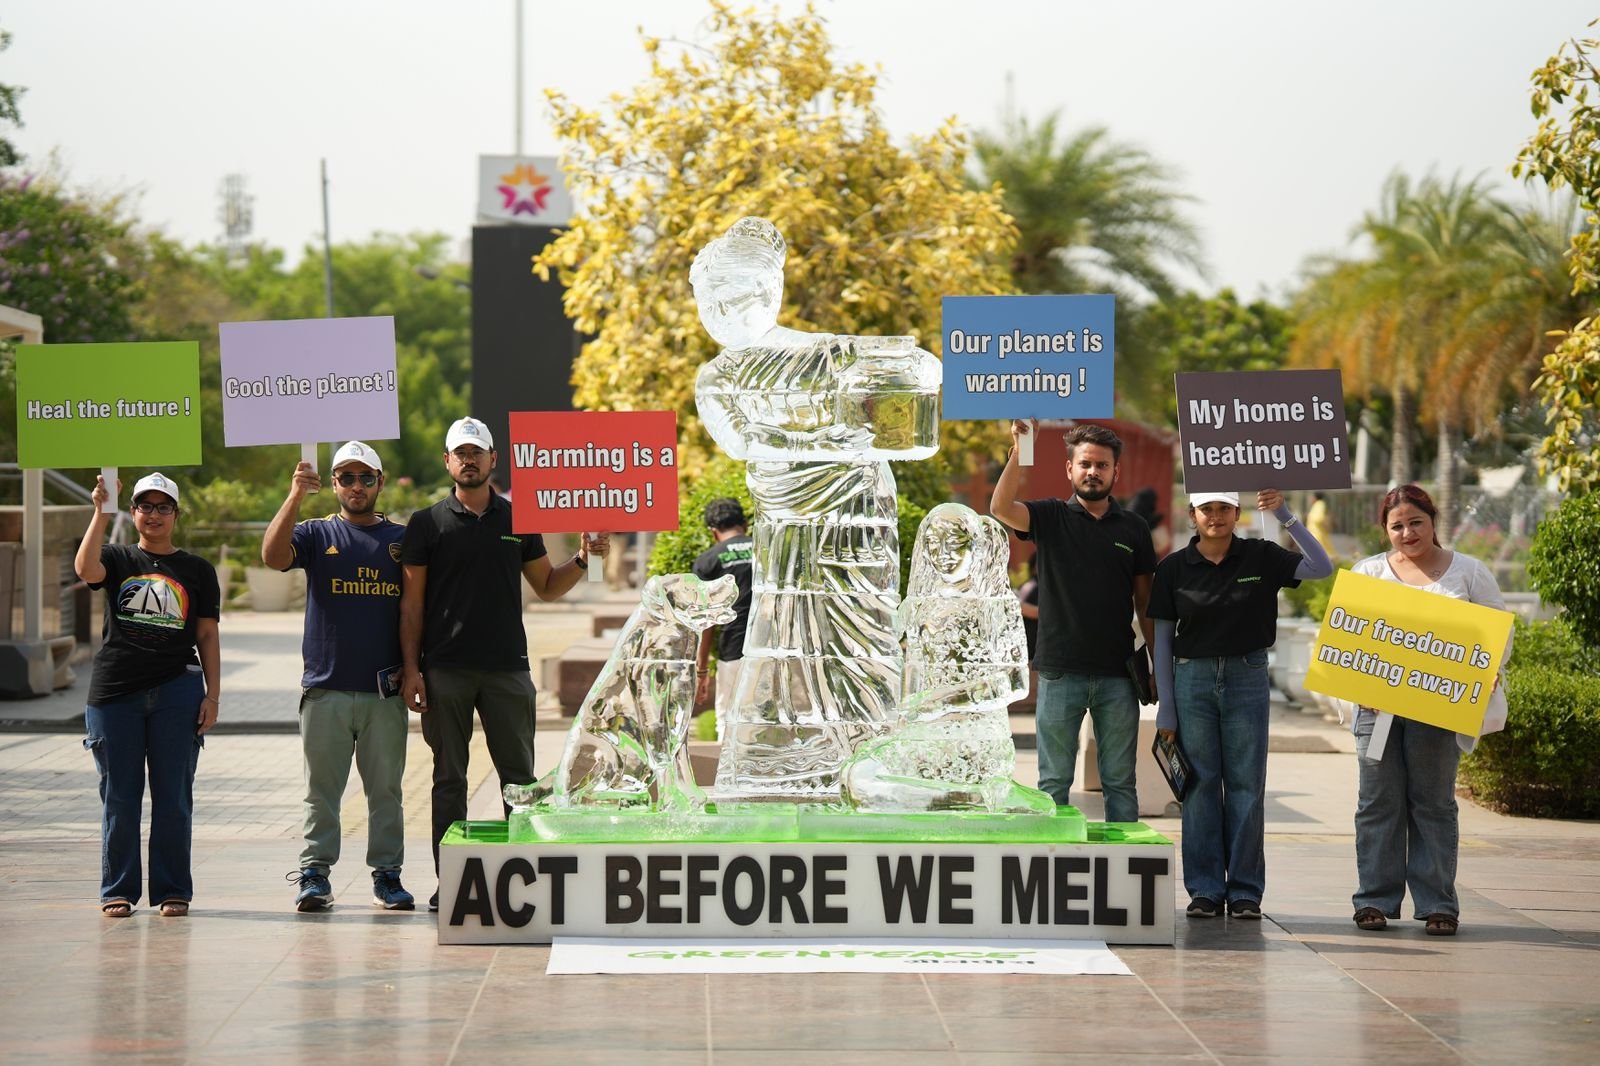 Premier World | Melting Futures: Greenpeace India's dramatic Ice Sculpture activity symbolises heatwave disasters unfolding across India